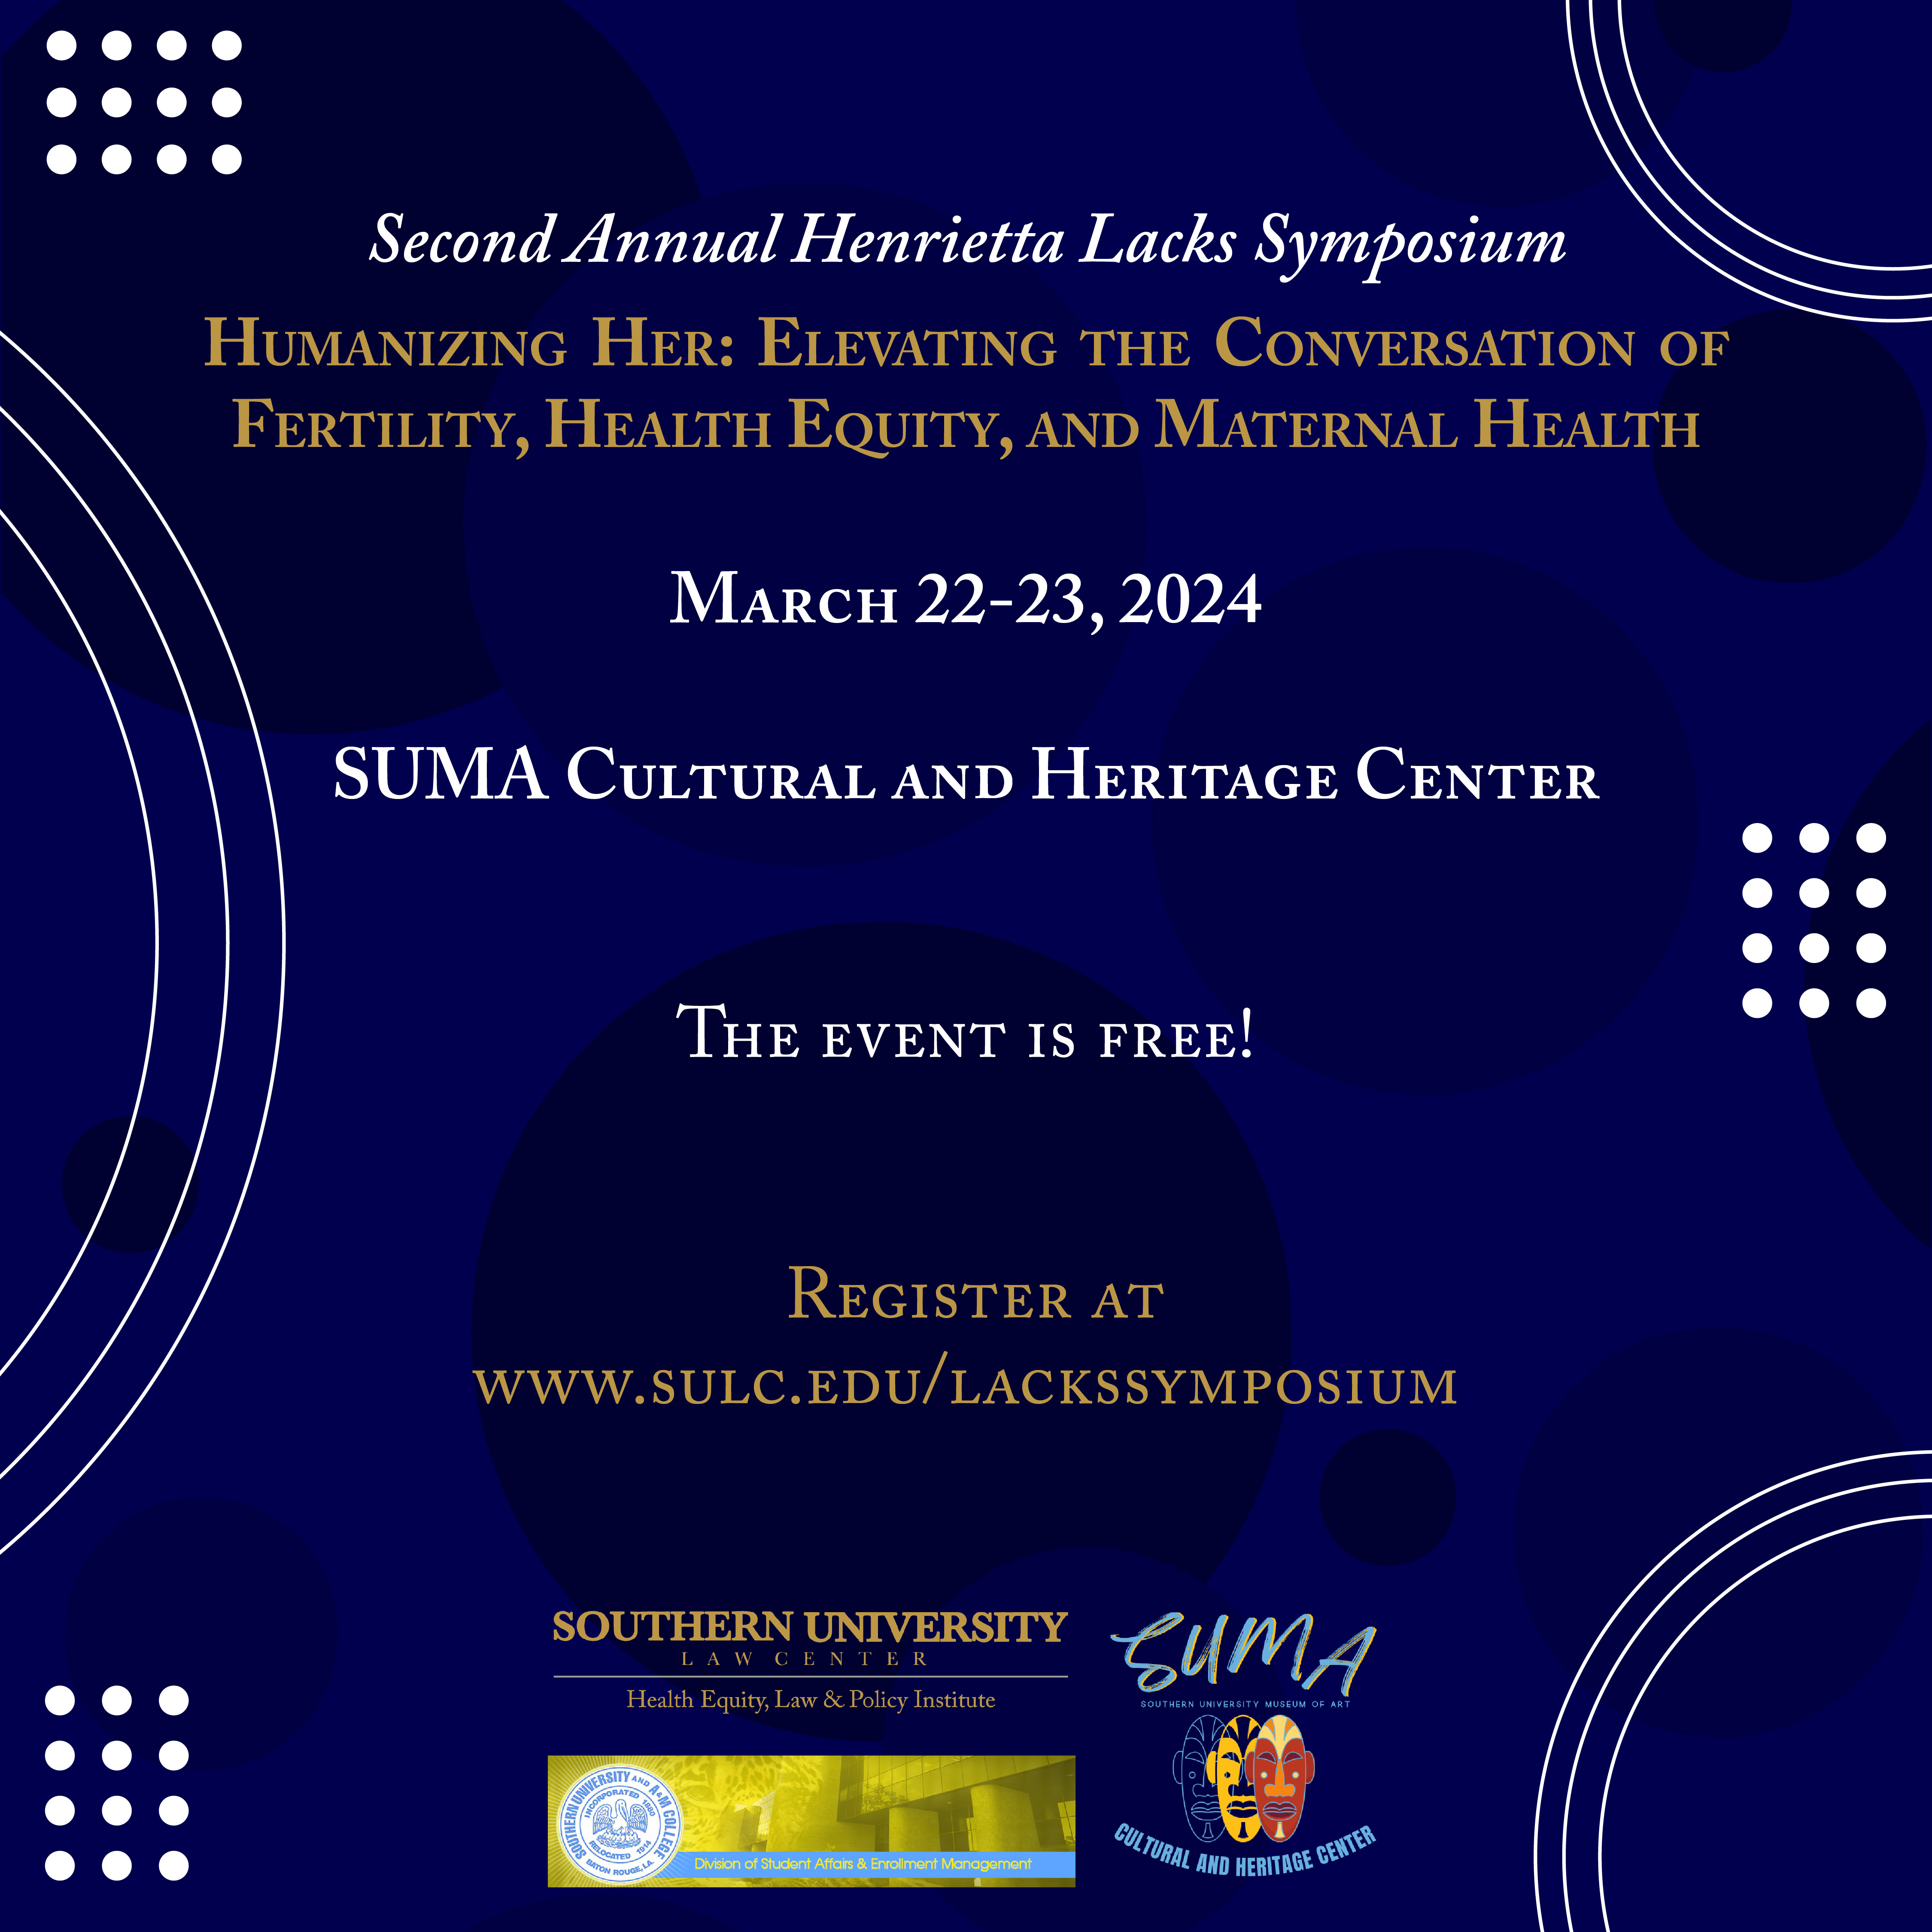 2nd Annual Henrietta Lacks Symposium